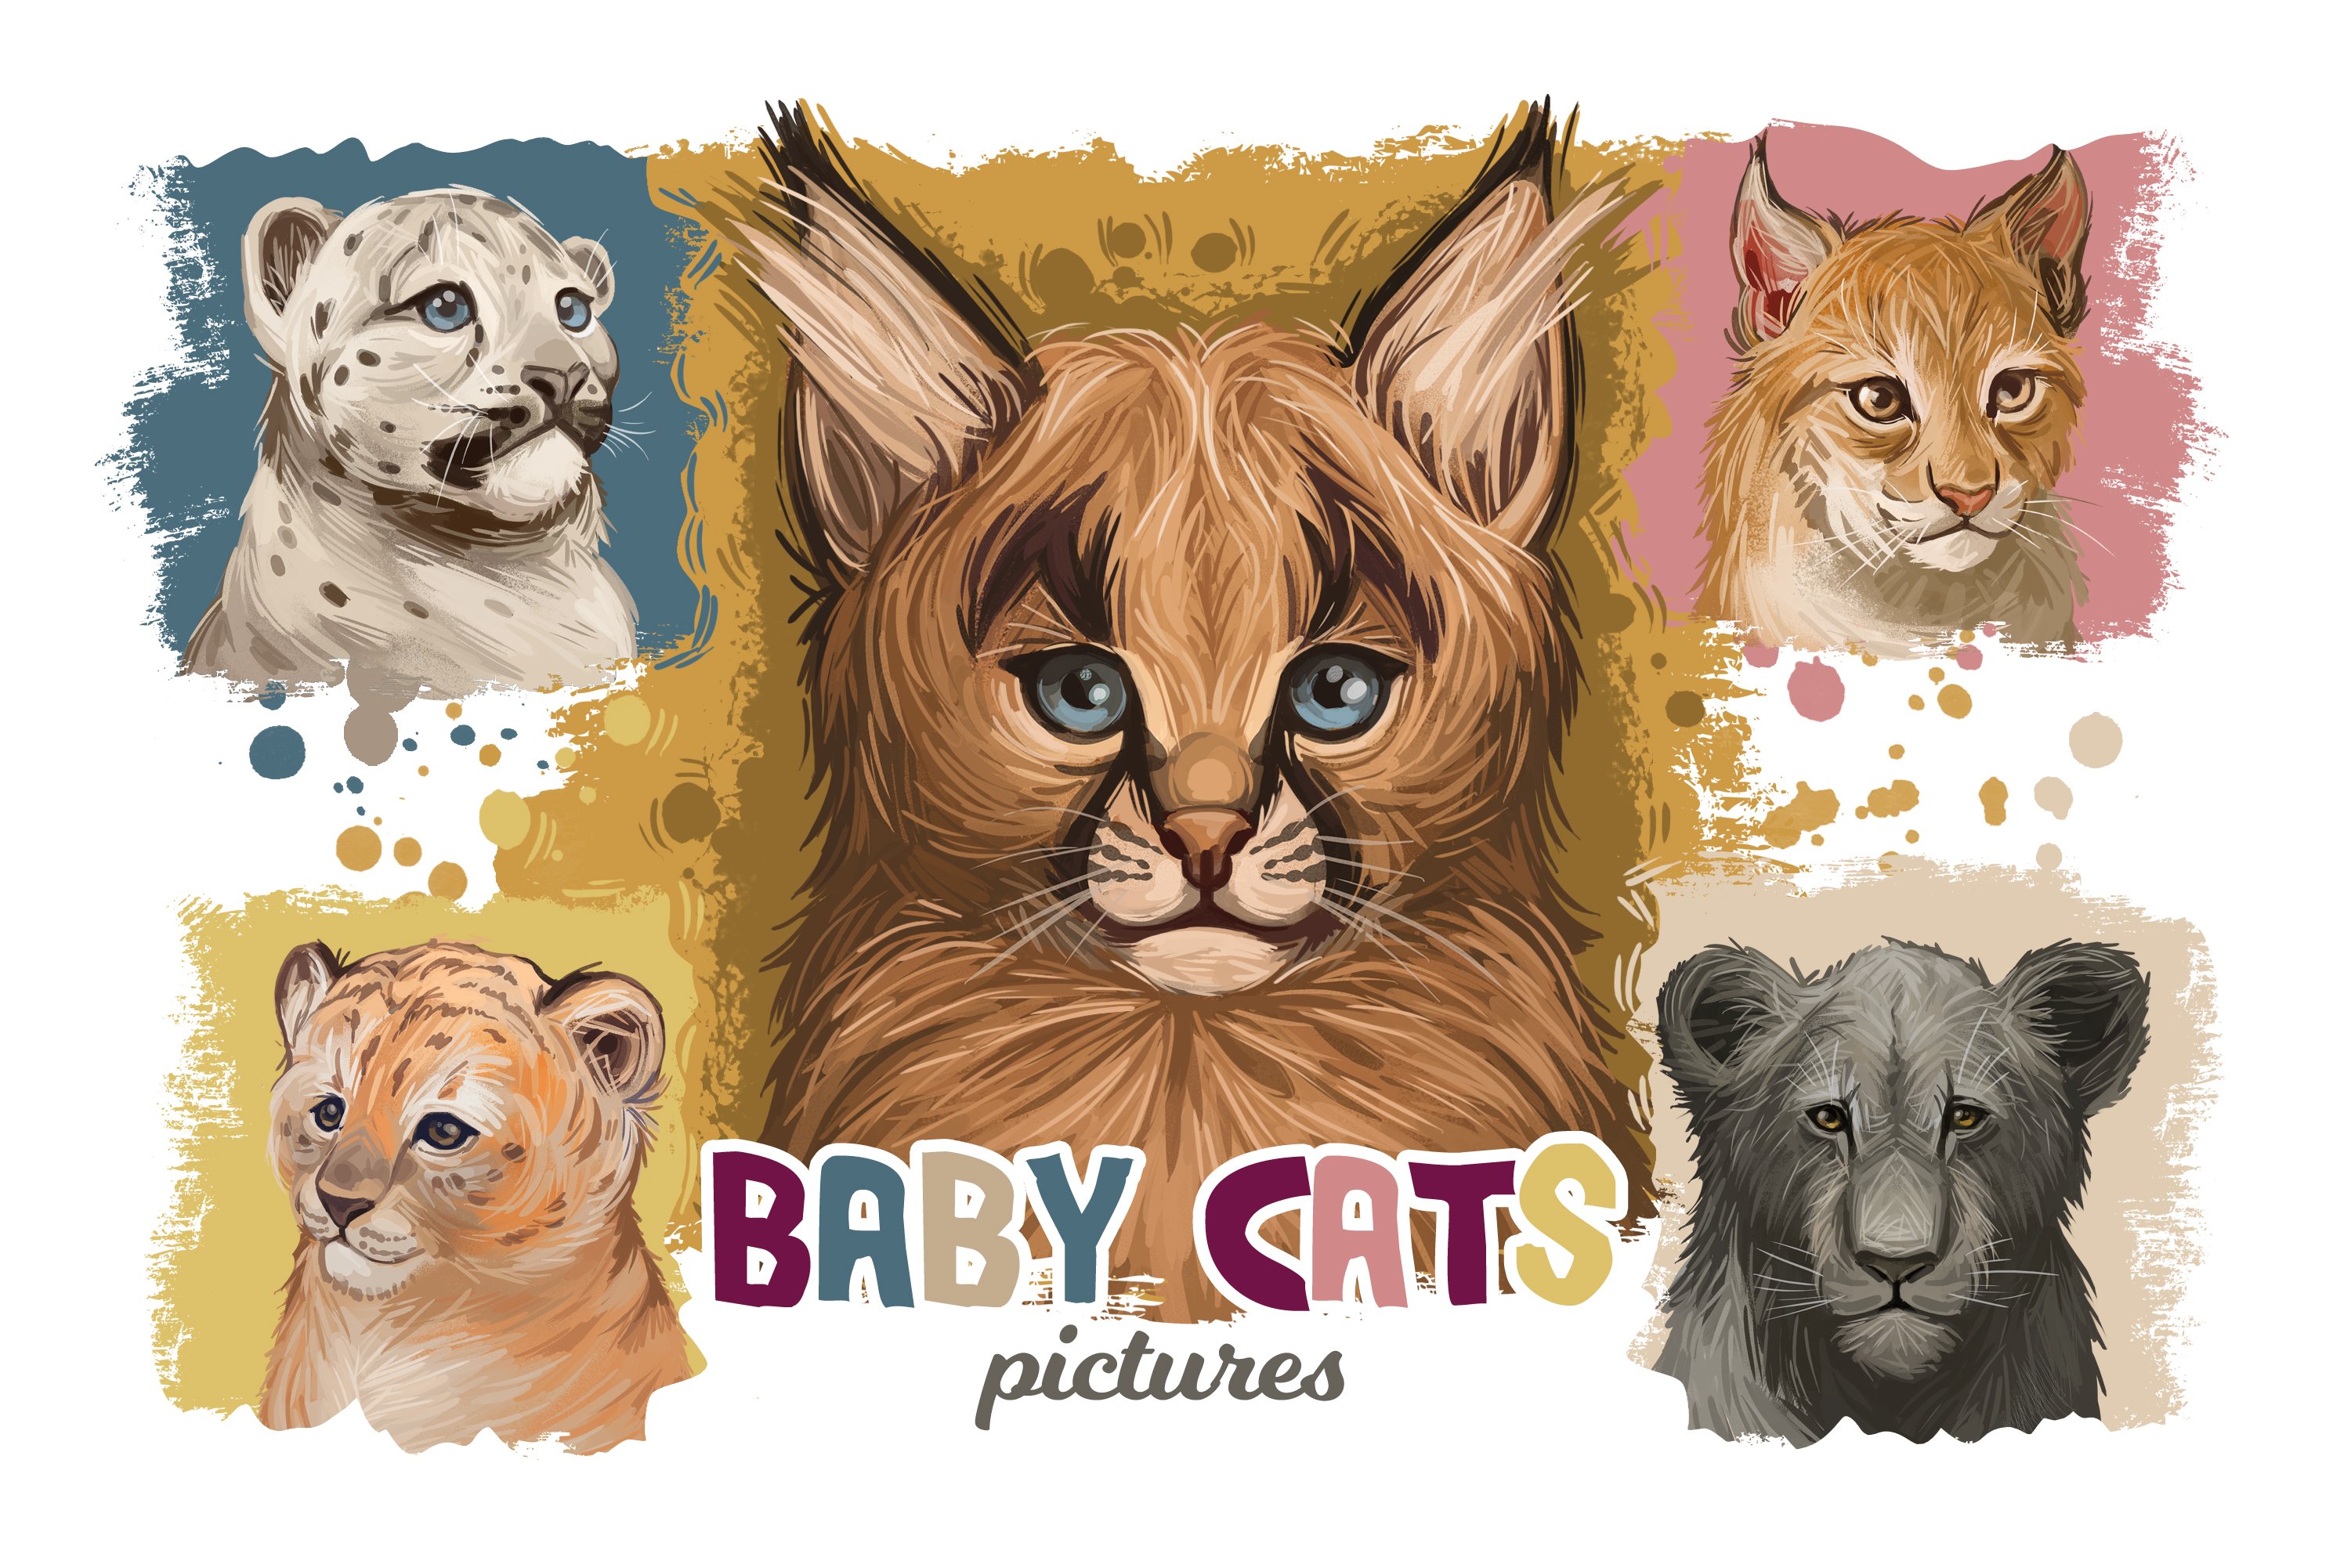 Wild Cats Baby Animals 15 Species cover image.